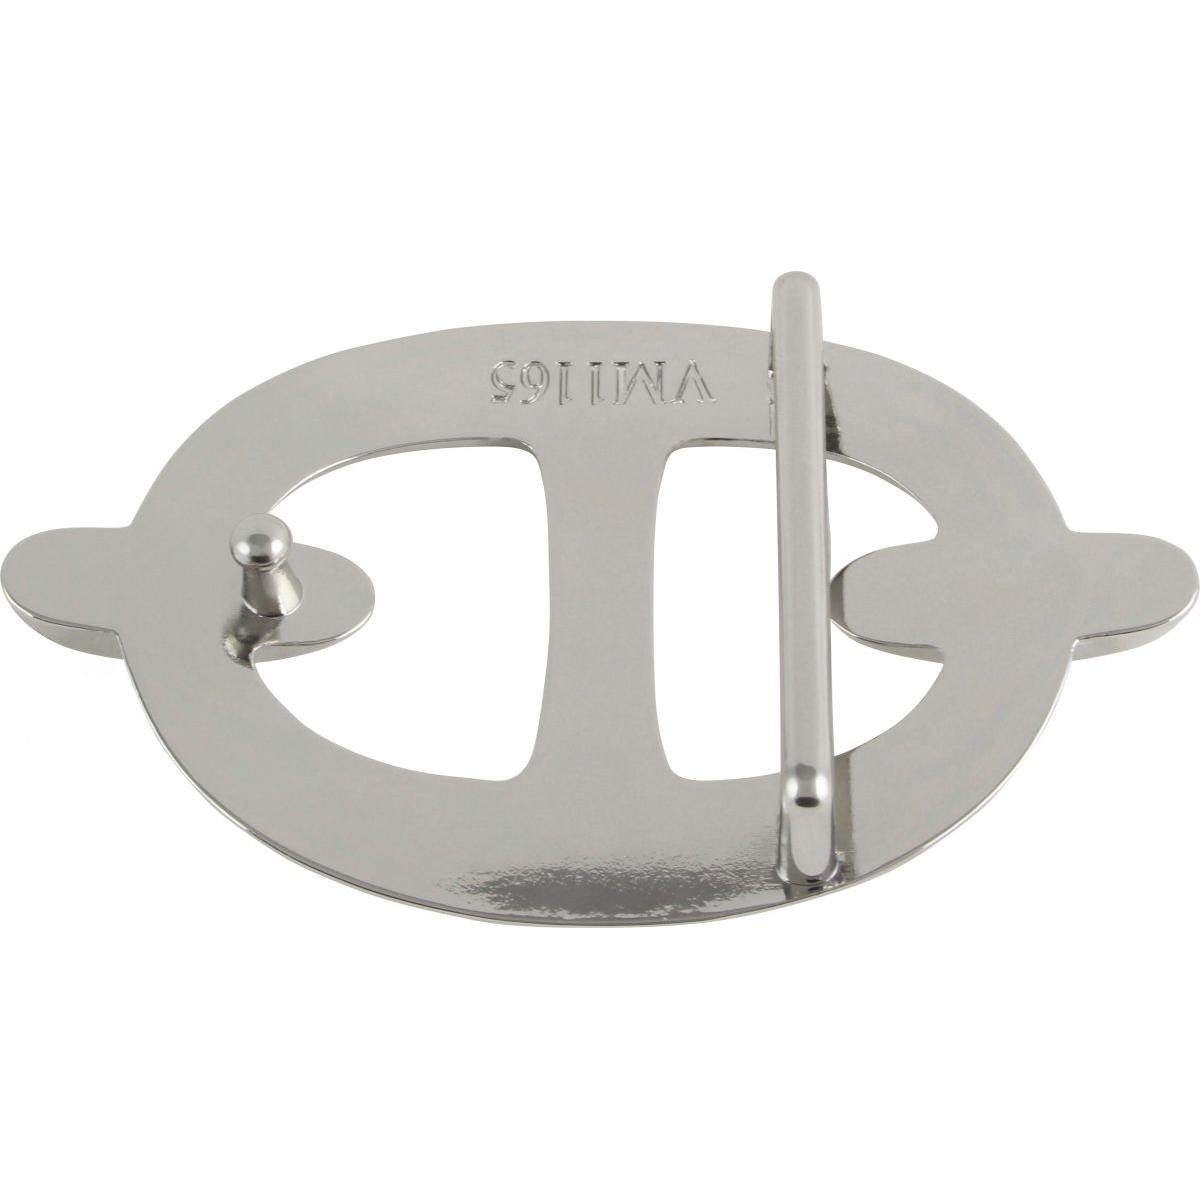 Gürtelschließe glänzend Buckle - 4,0 Wechselschließe Silber cm BELTINGER Saturn Gürtel 40mm - Gürtelschnalle bi